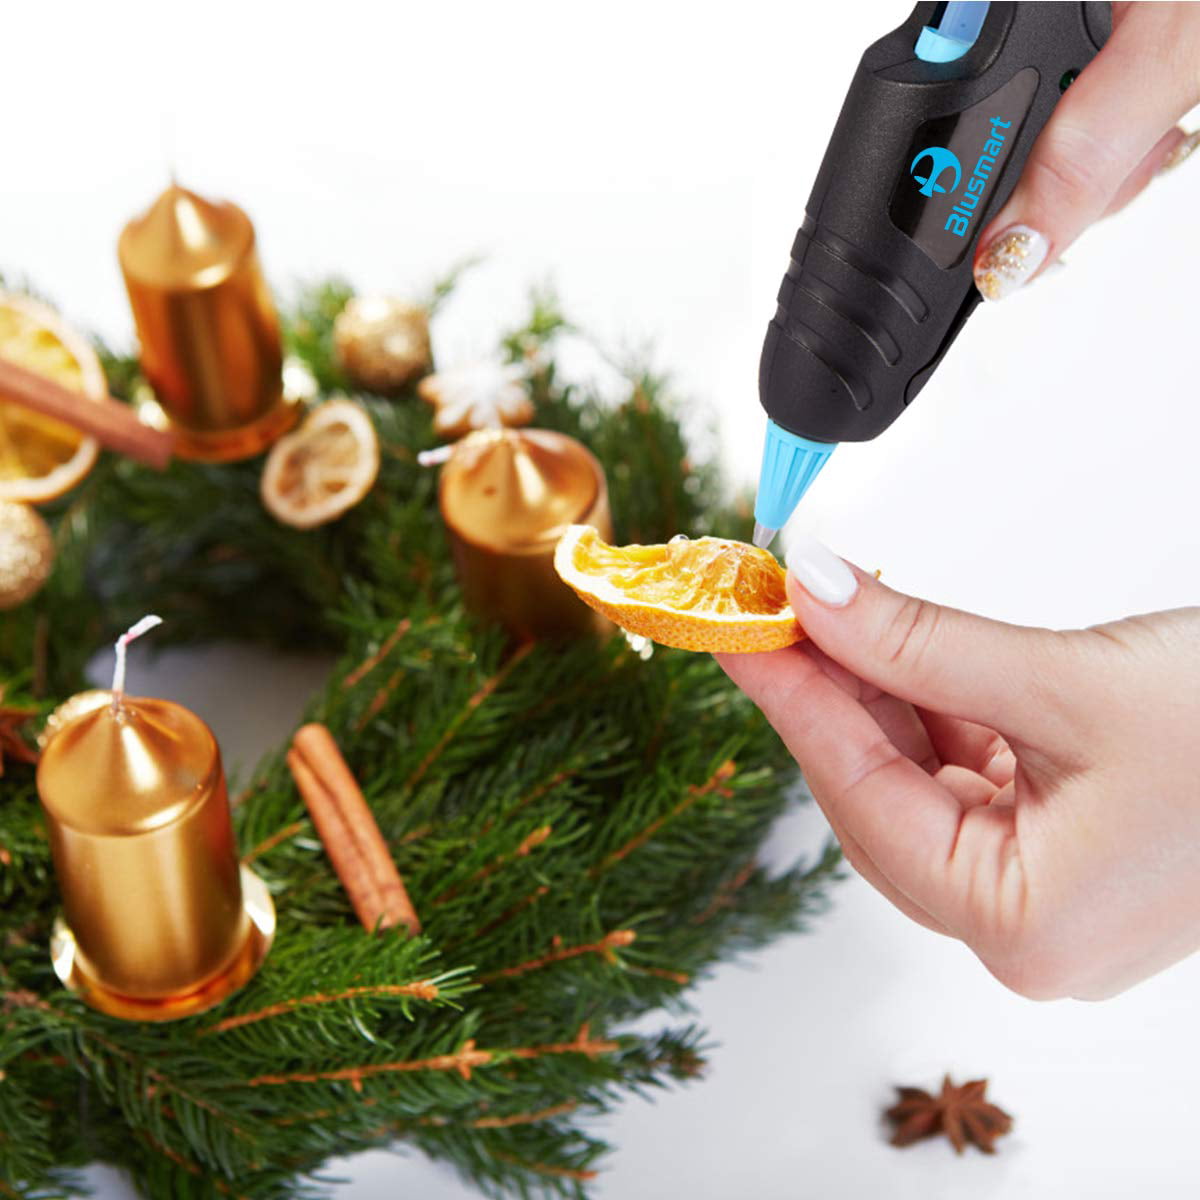 Blusmart 20W Mini Hot Glue Gun Fast Heating for DIY Craft Home Quick Repairs 